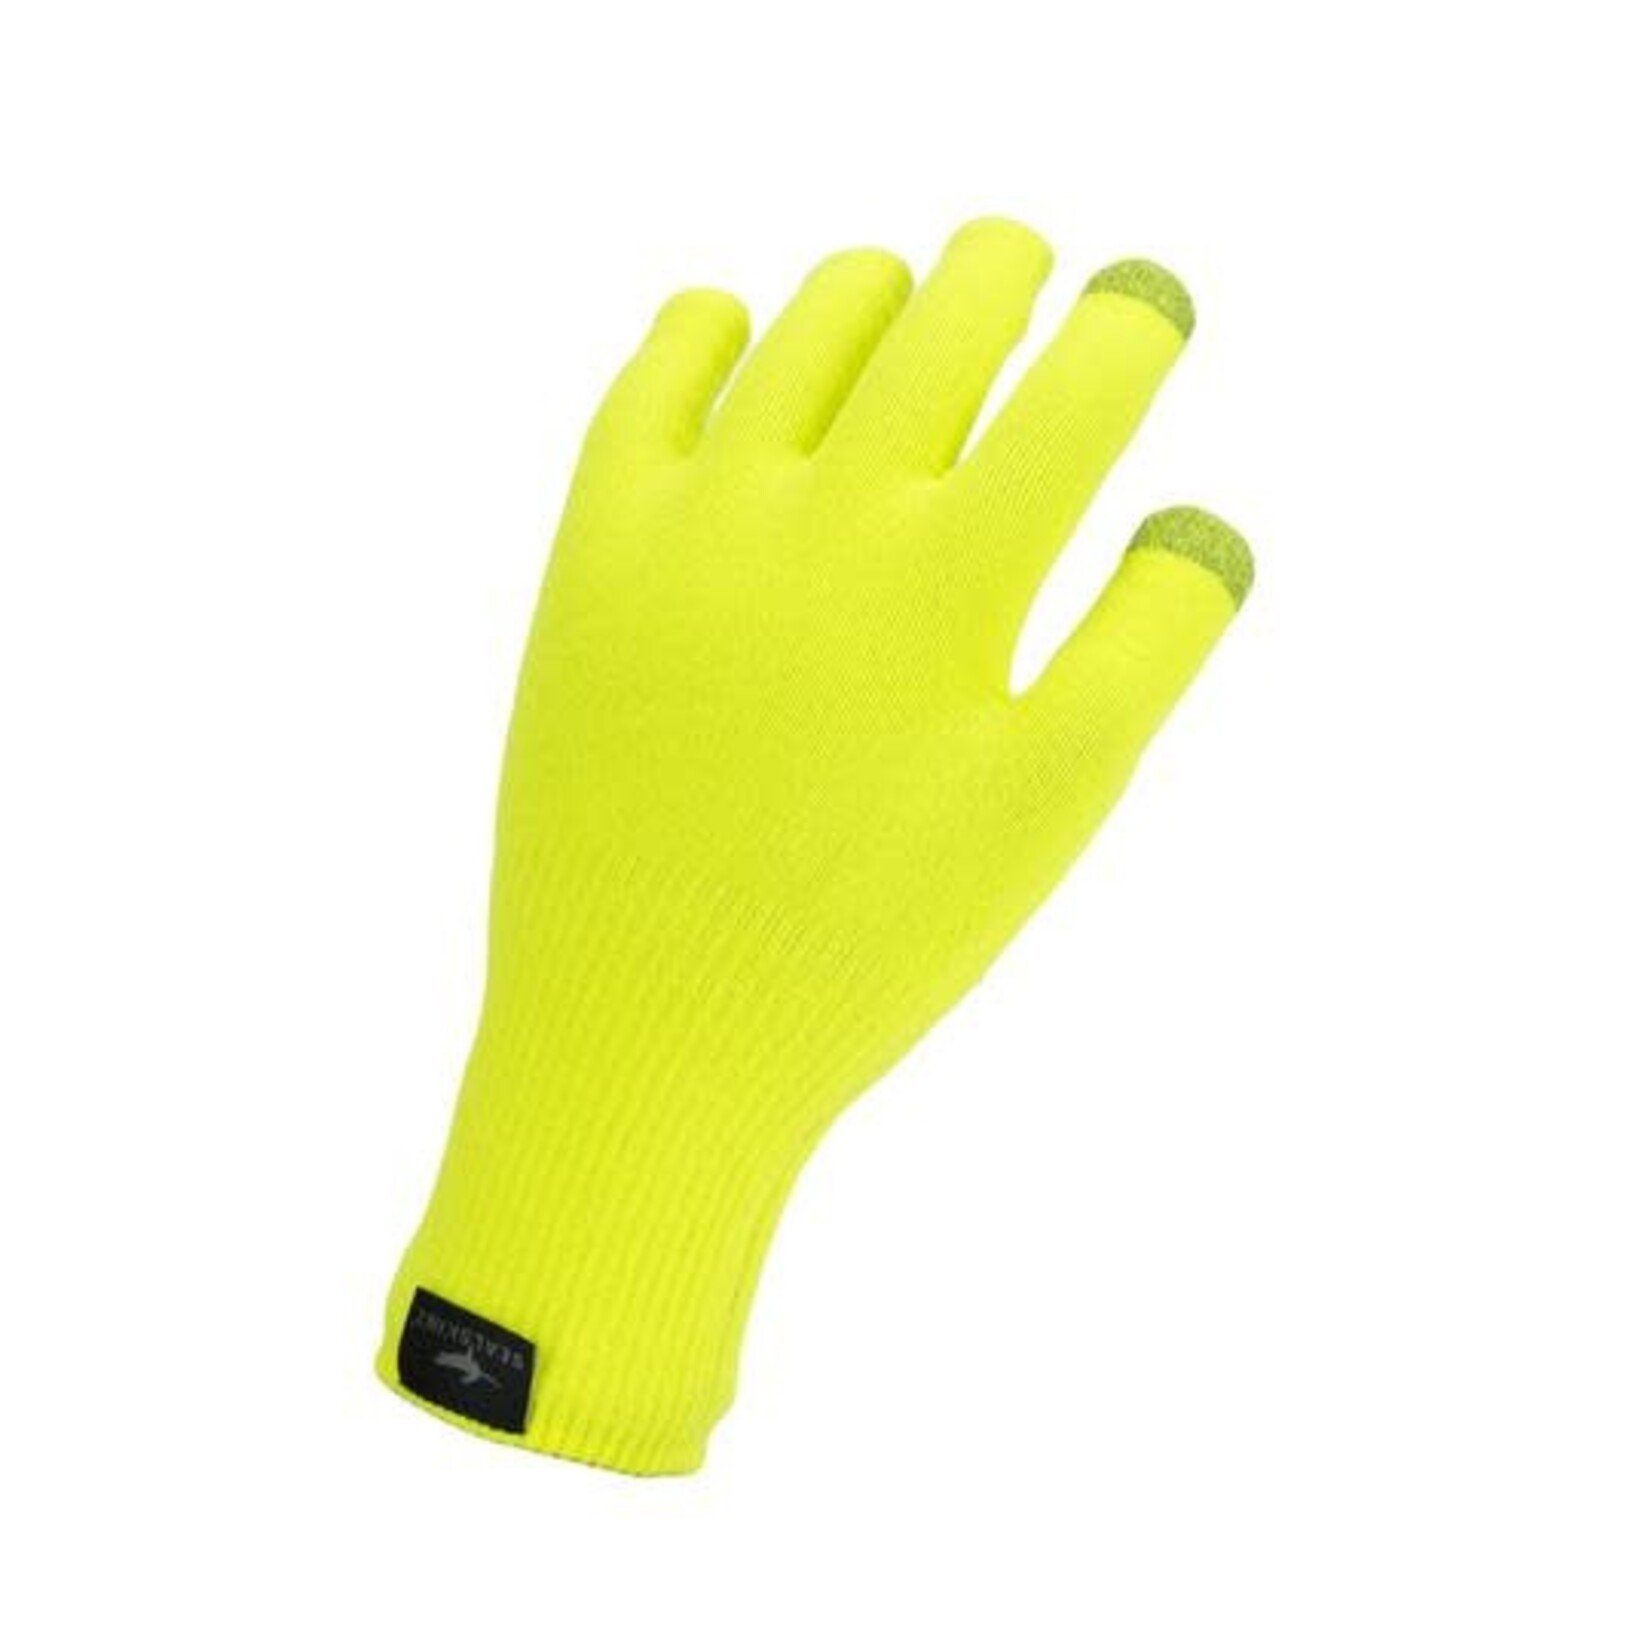 SealSkinz SealSkinz Waterproof All Weather Ultra Grip Knitted Glove Neon Yellow XL